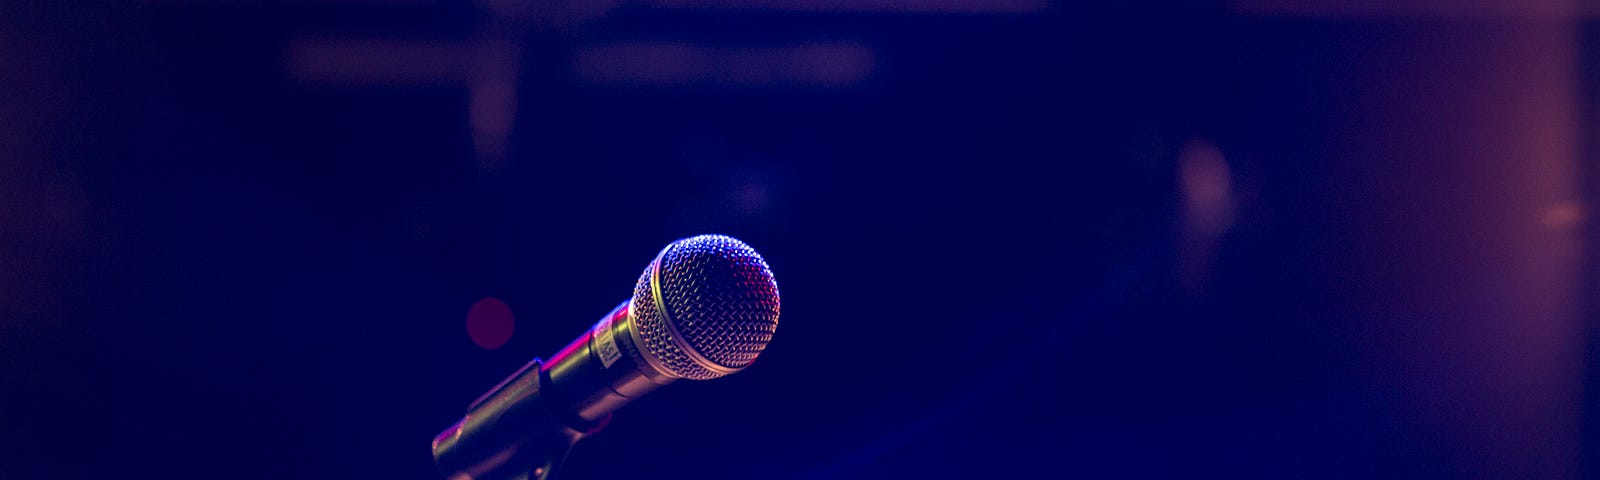 A microphone on a microphone stand in a dark club.